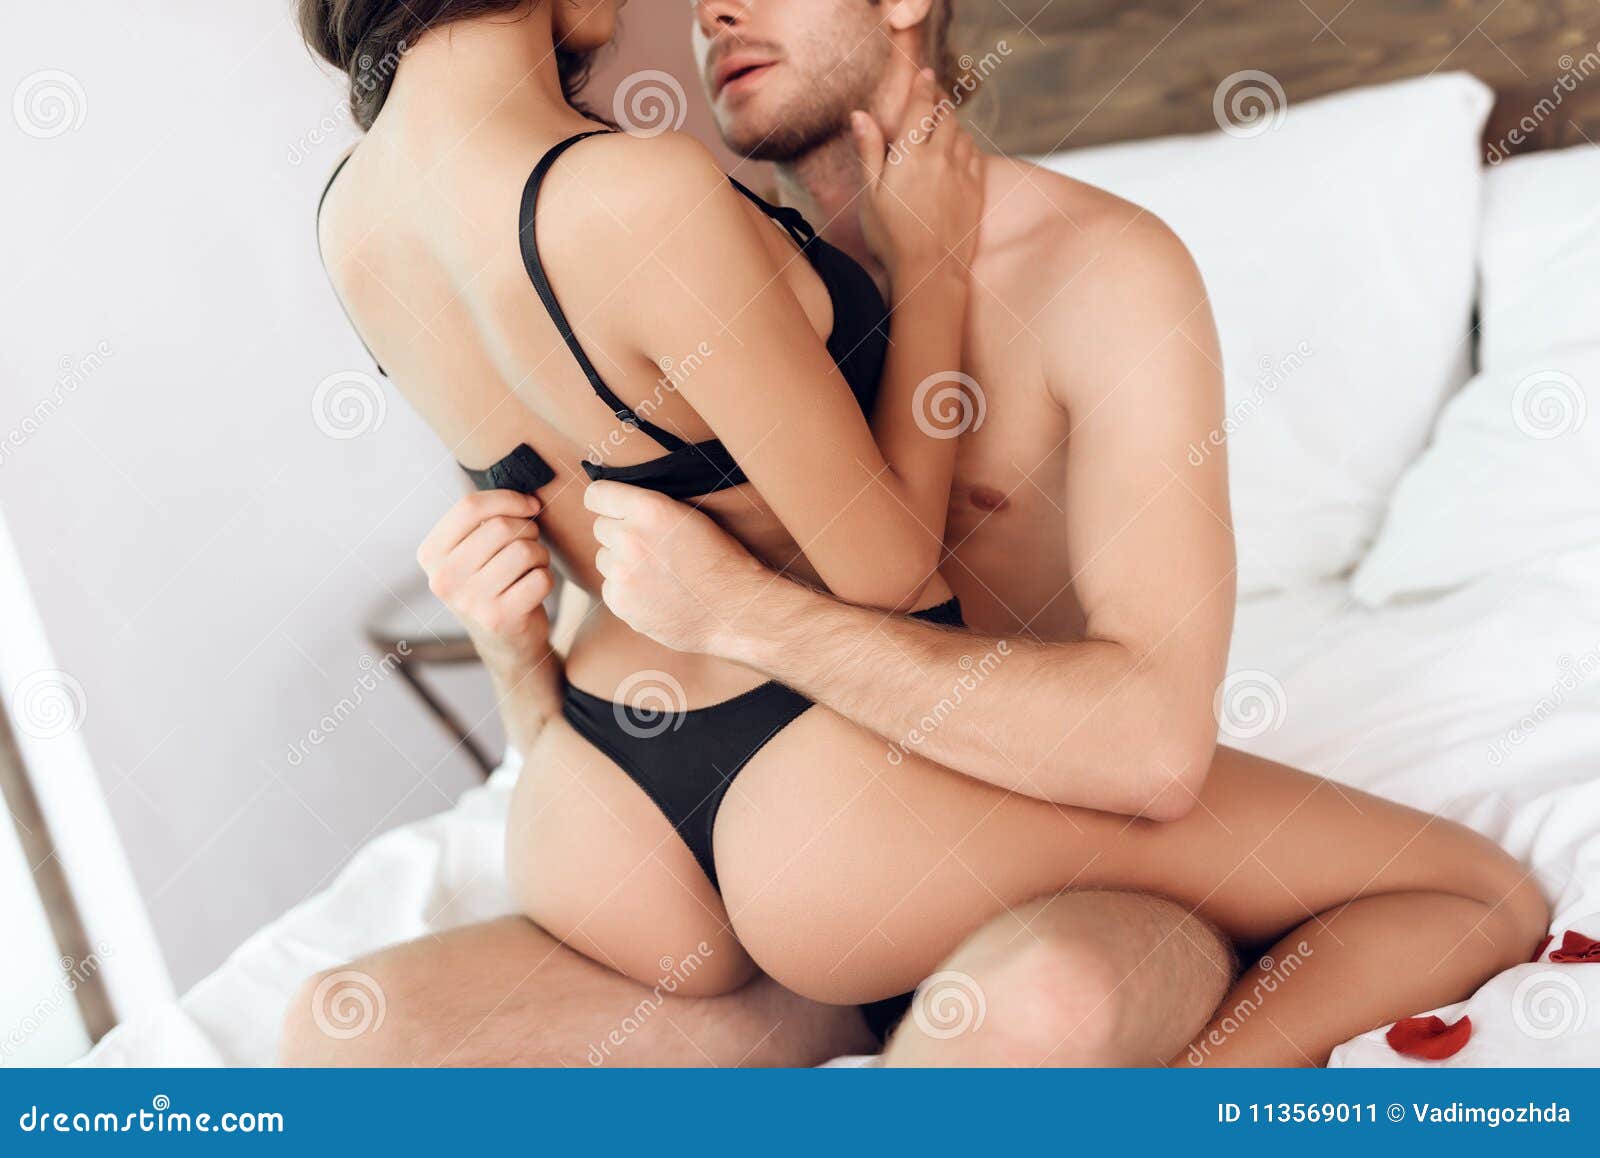 Romantic Bed Porn Pictures